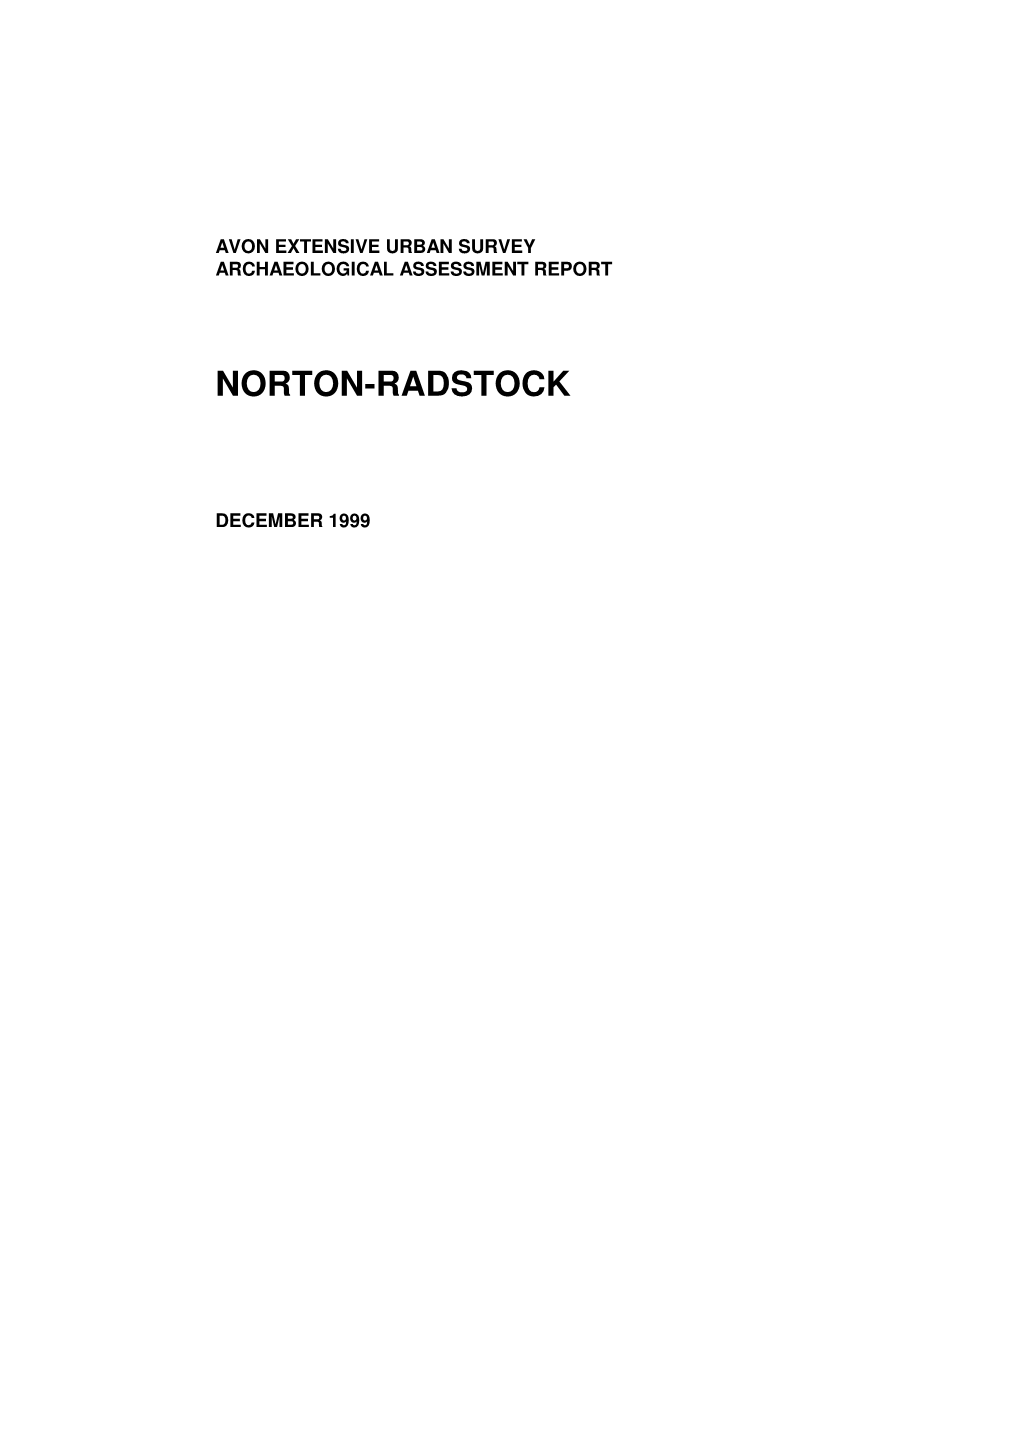 Norton-Radstock Report